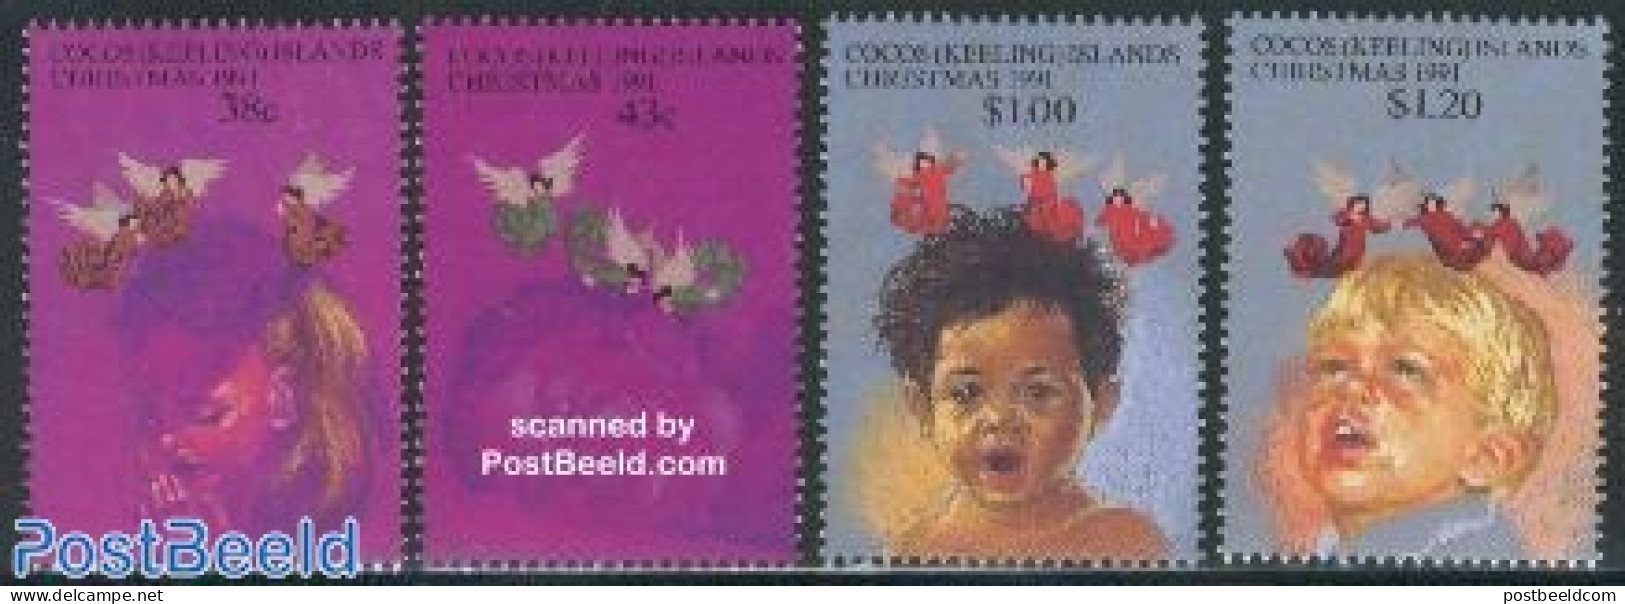 Cocos Islands 1991 Christmas 4v, Mint NH, Religion - Angels - Christmas - Christentum